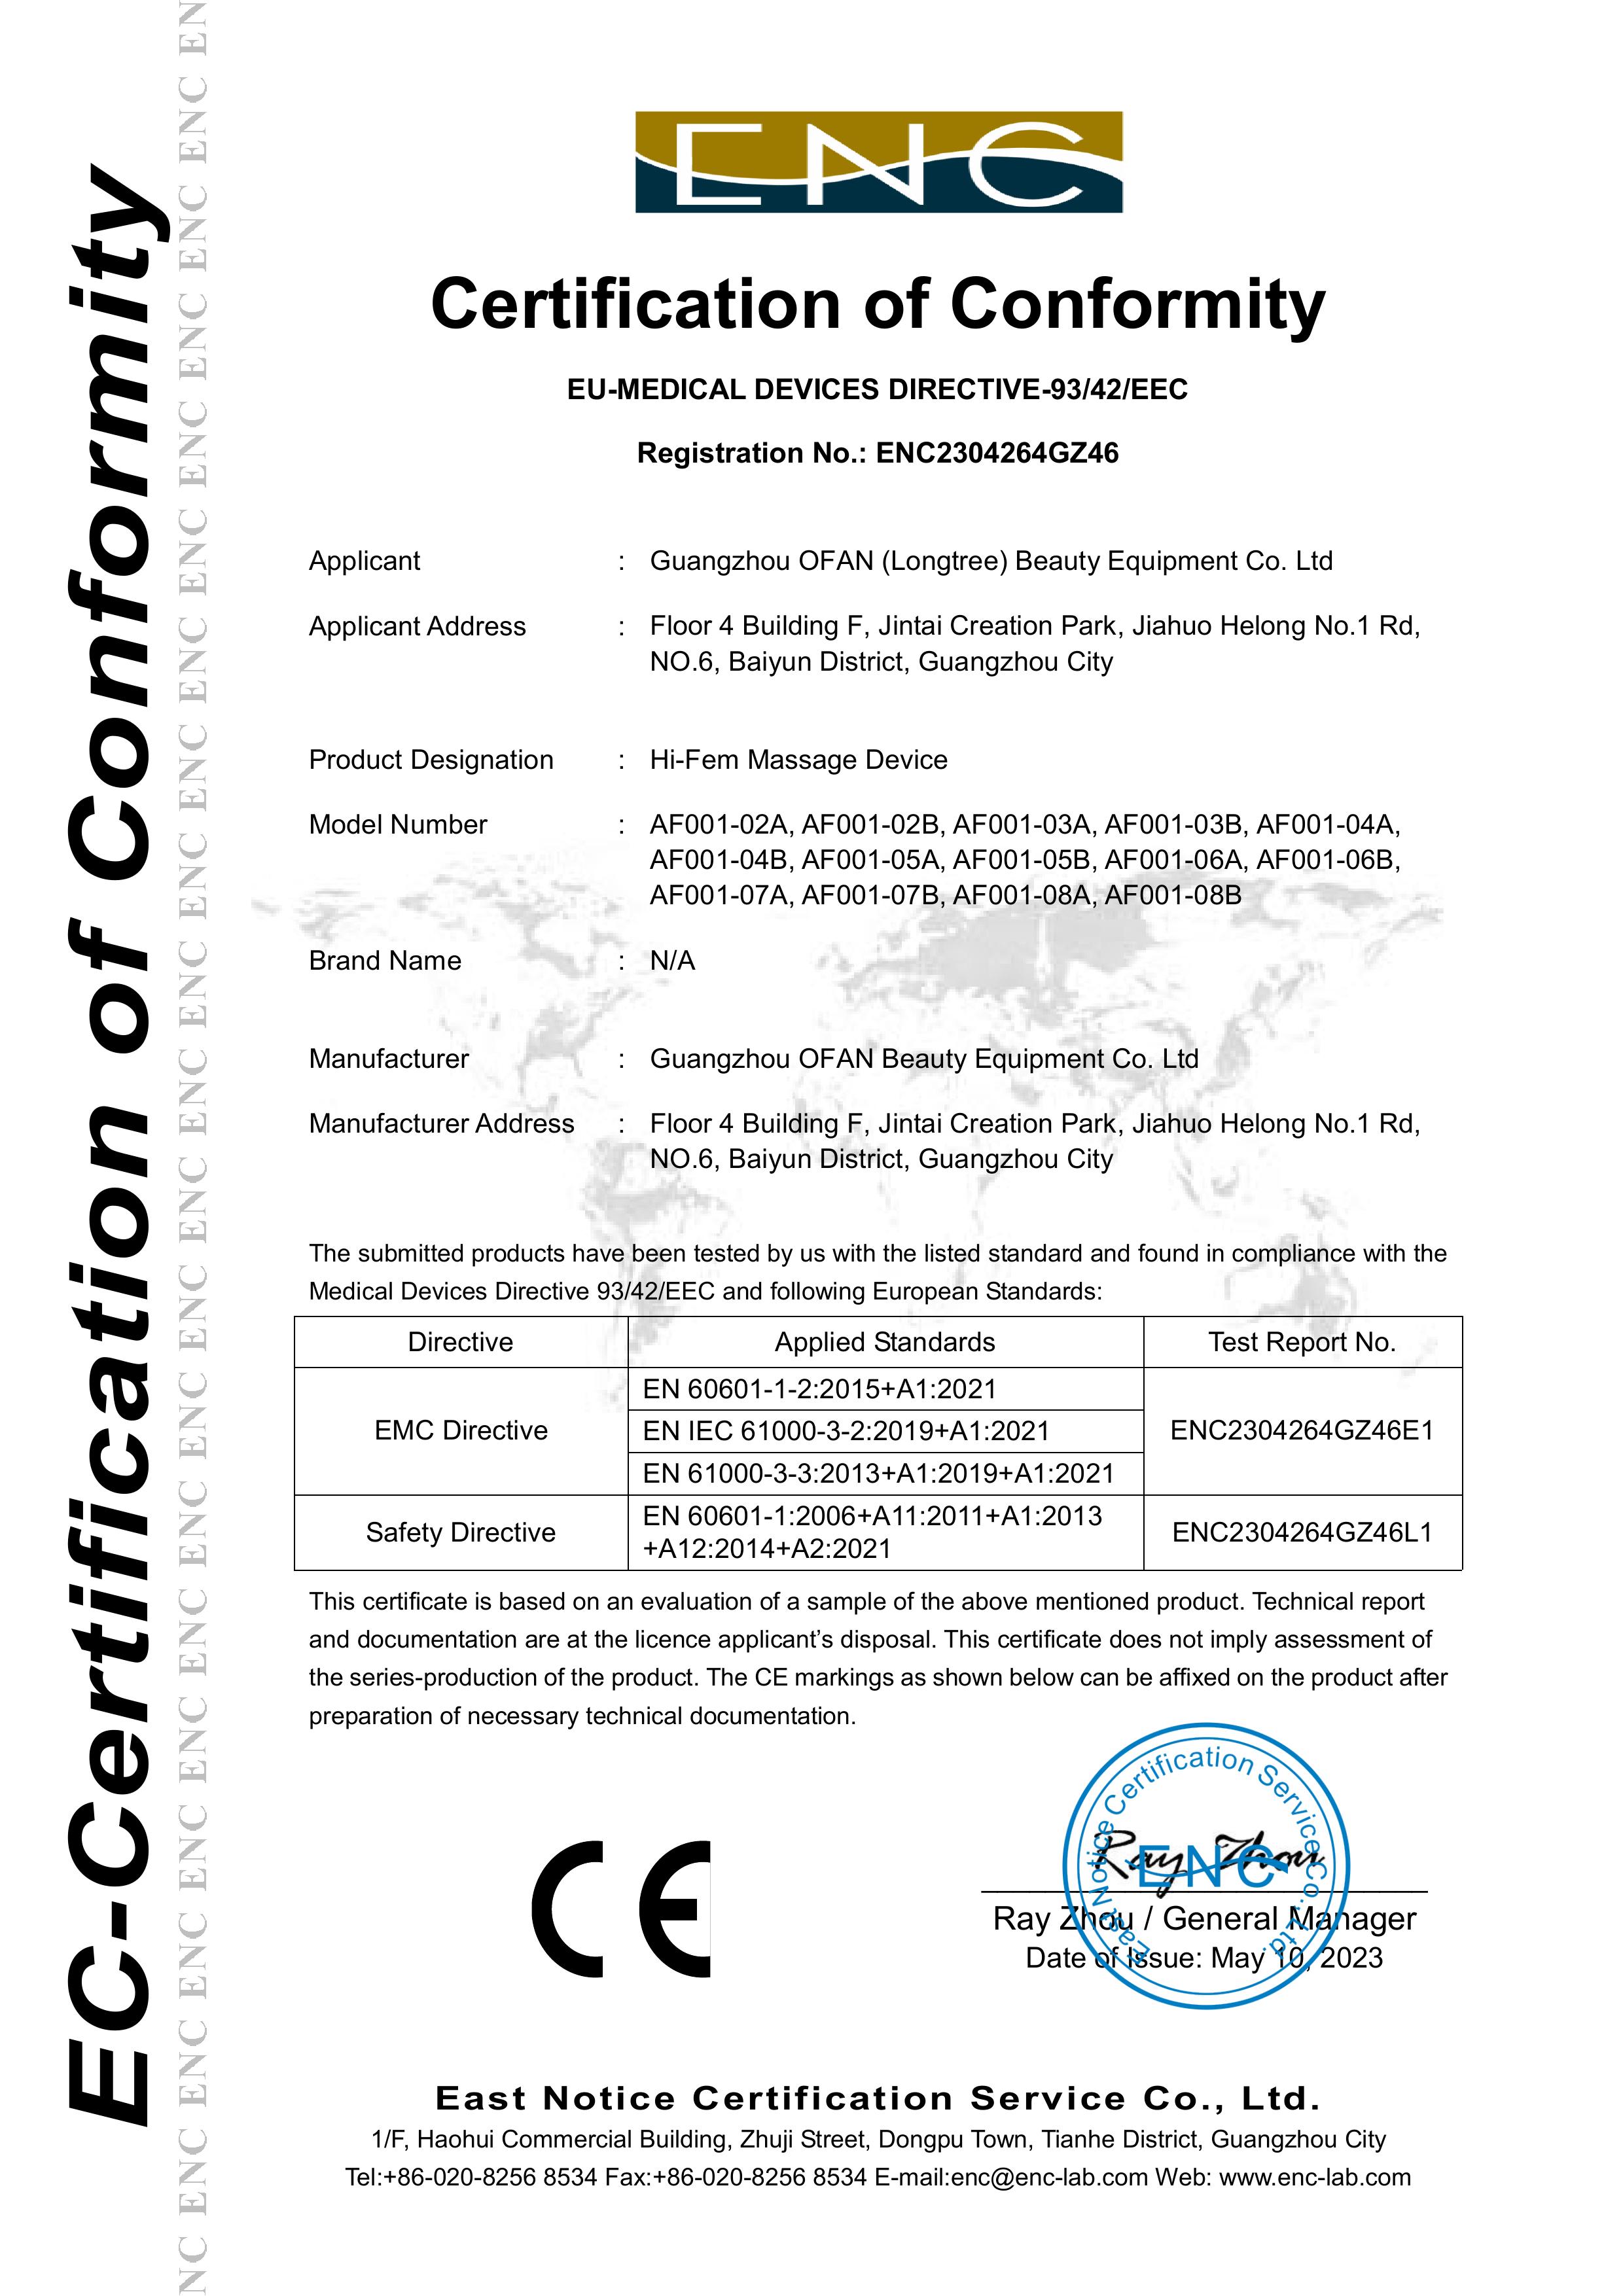 HIFEM Massage Device CE Certificate